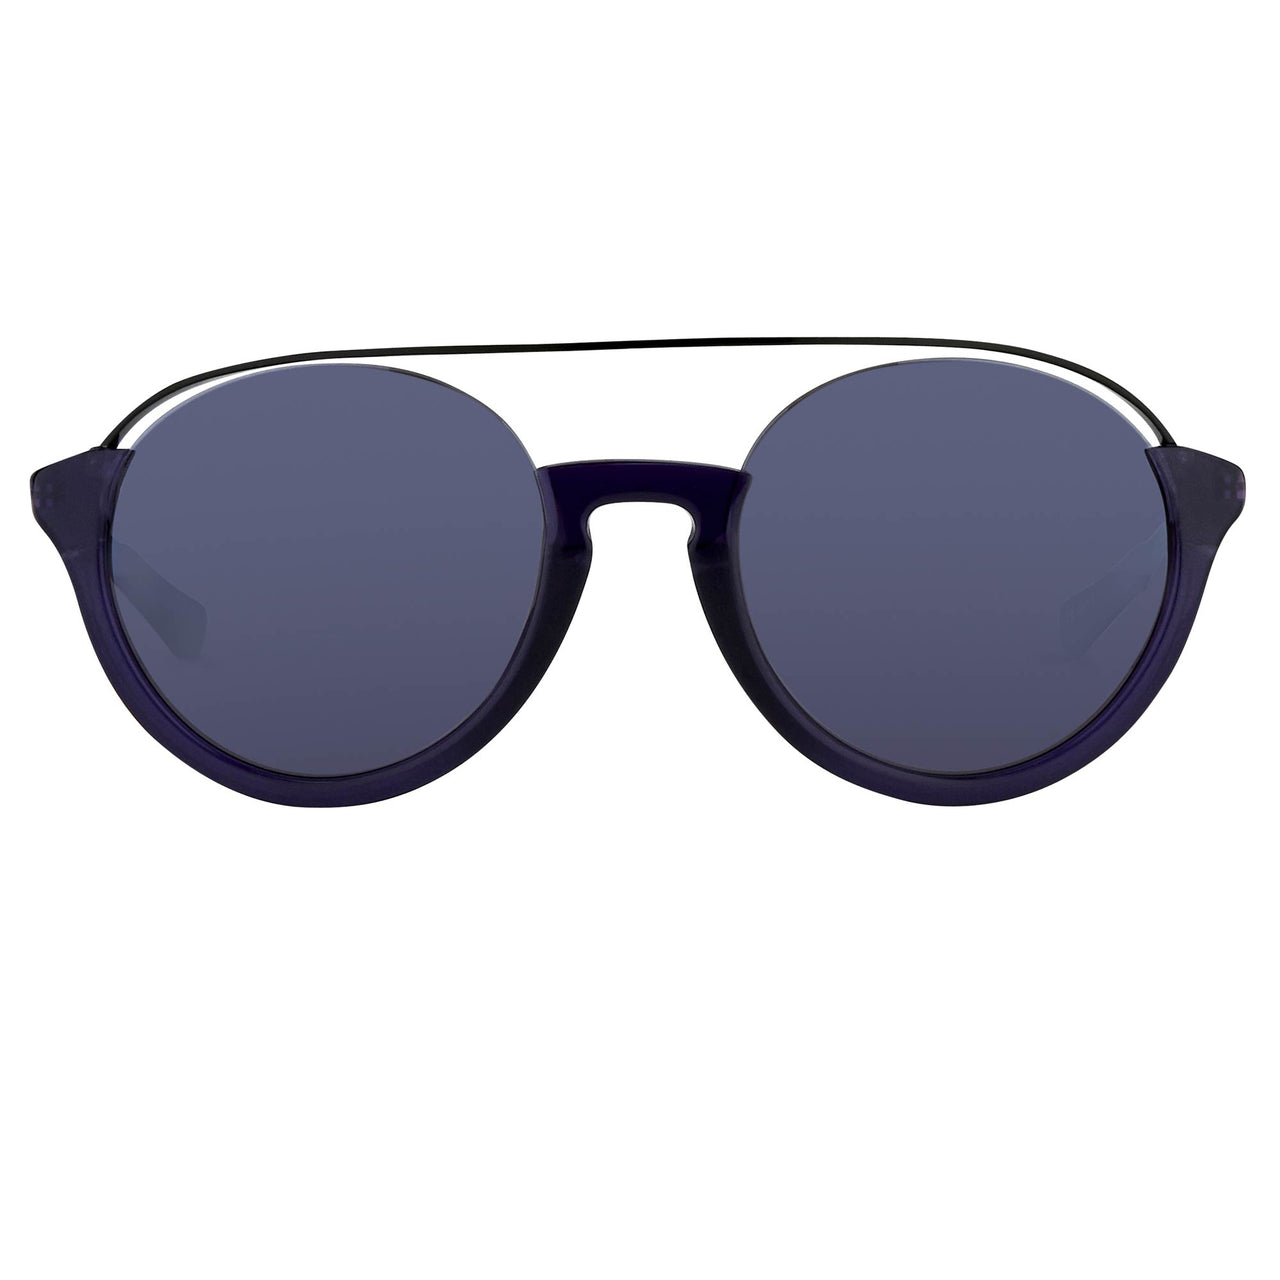 Kris Van Assche Unisex Sunglasses with Titanium Double Bridge Oval Navy Black and Blue Mirror Lenses Category 3 - KVA83C4SUN - Watches & Crystals